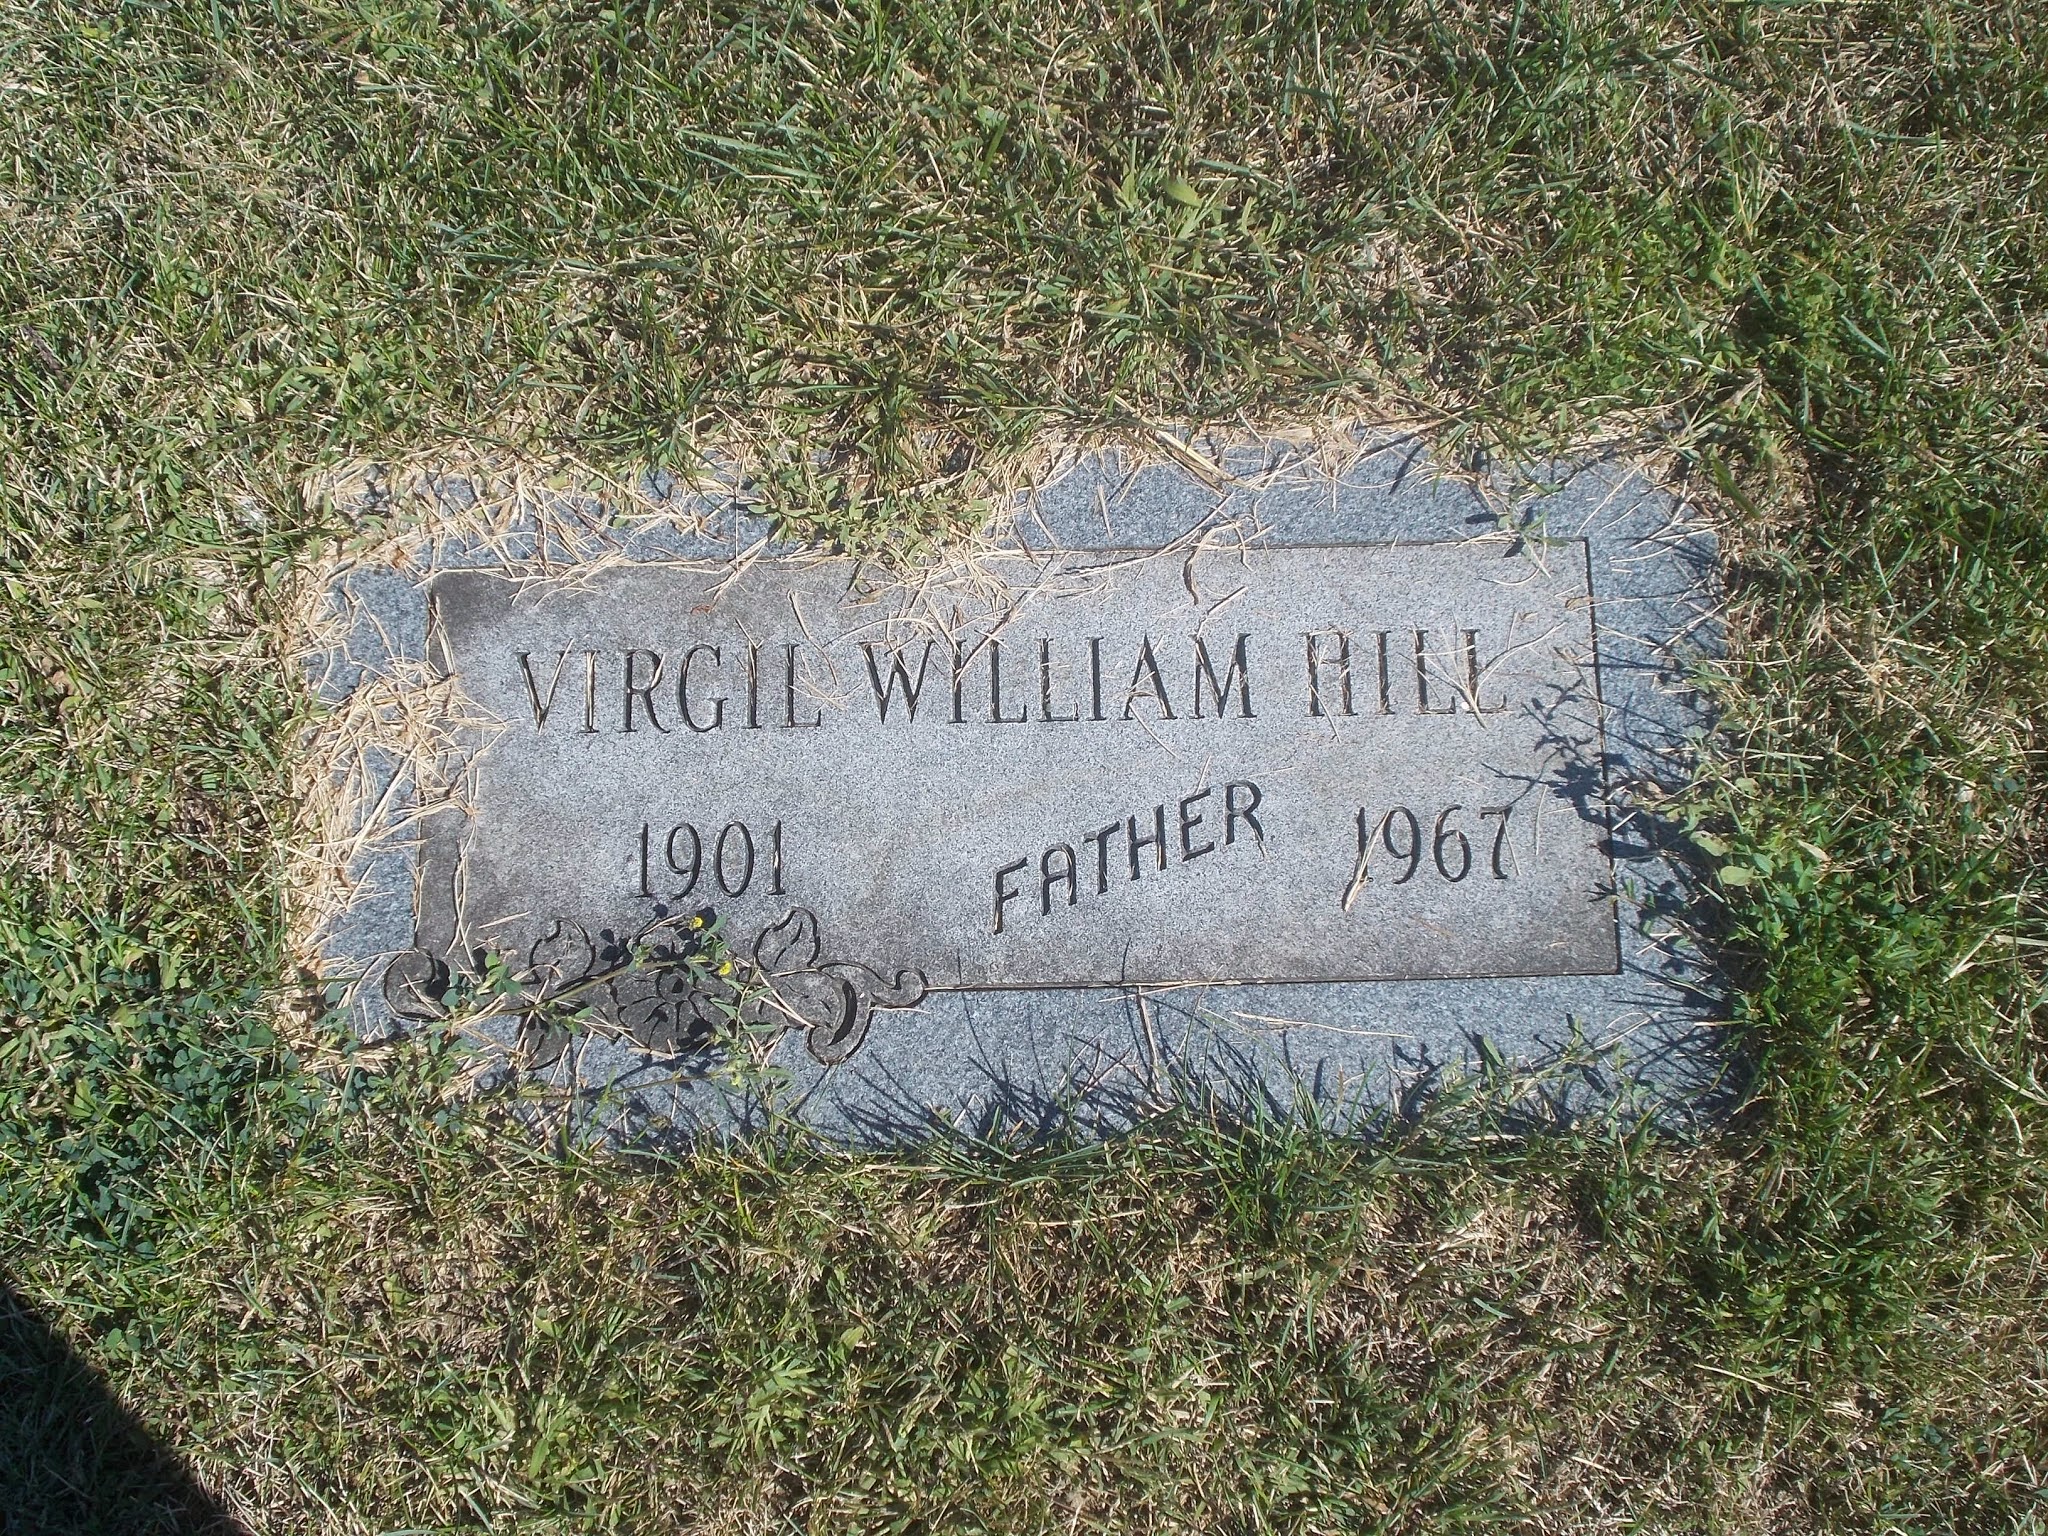 Virgil William Hill